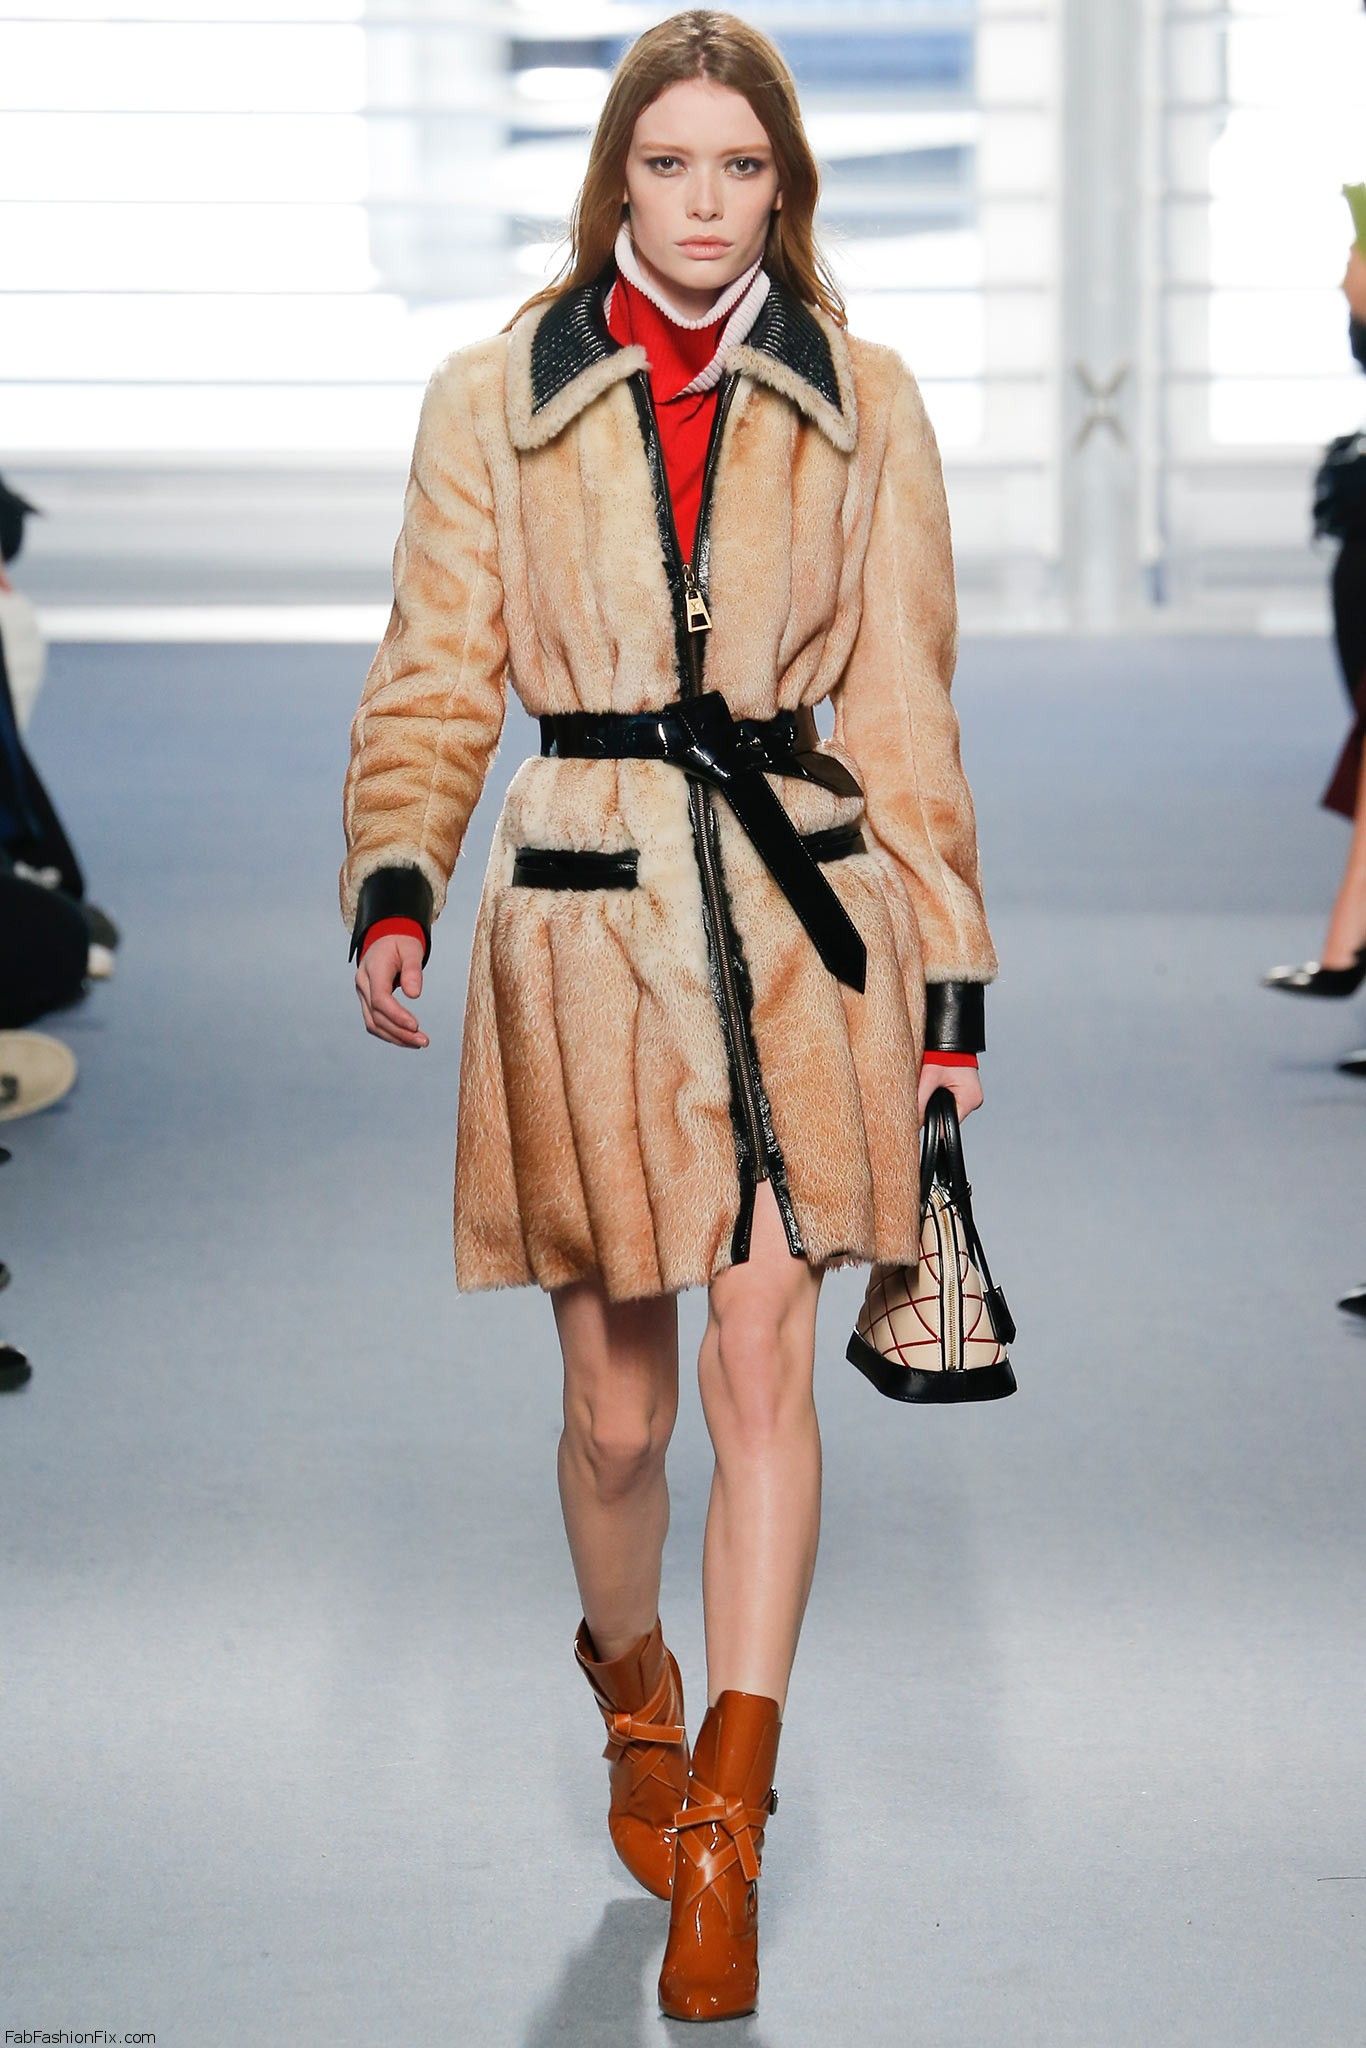 Louis Vuitton fall/winter 2014 collection – Paris fashion week | Fab ...